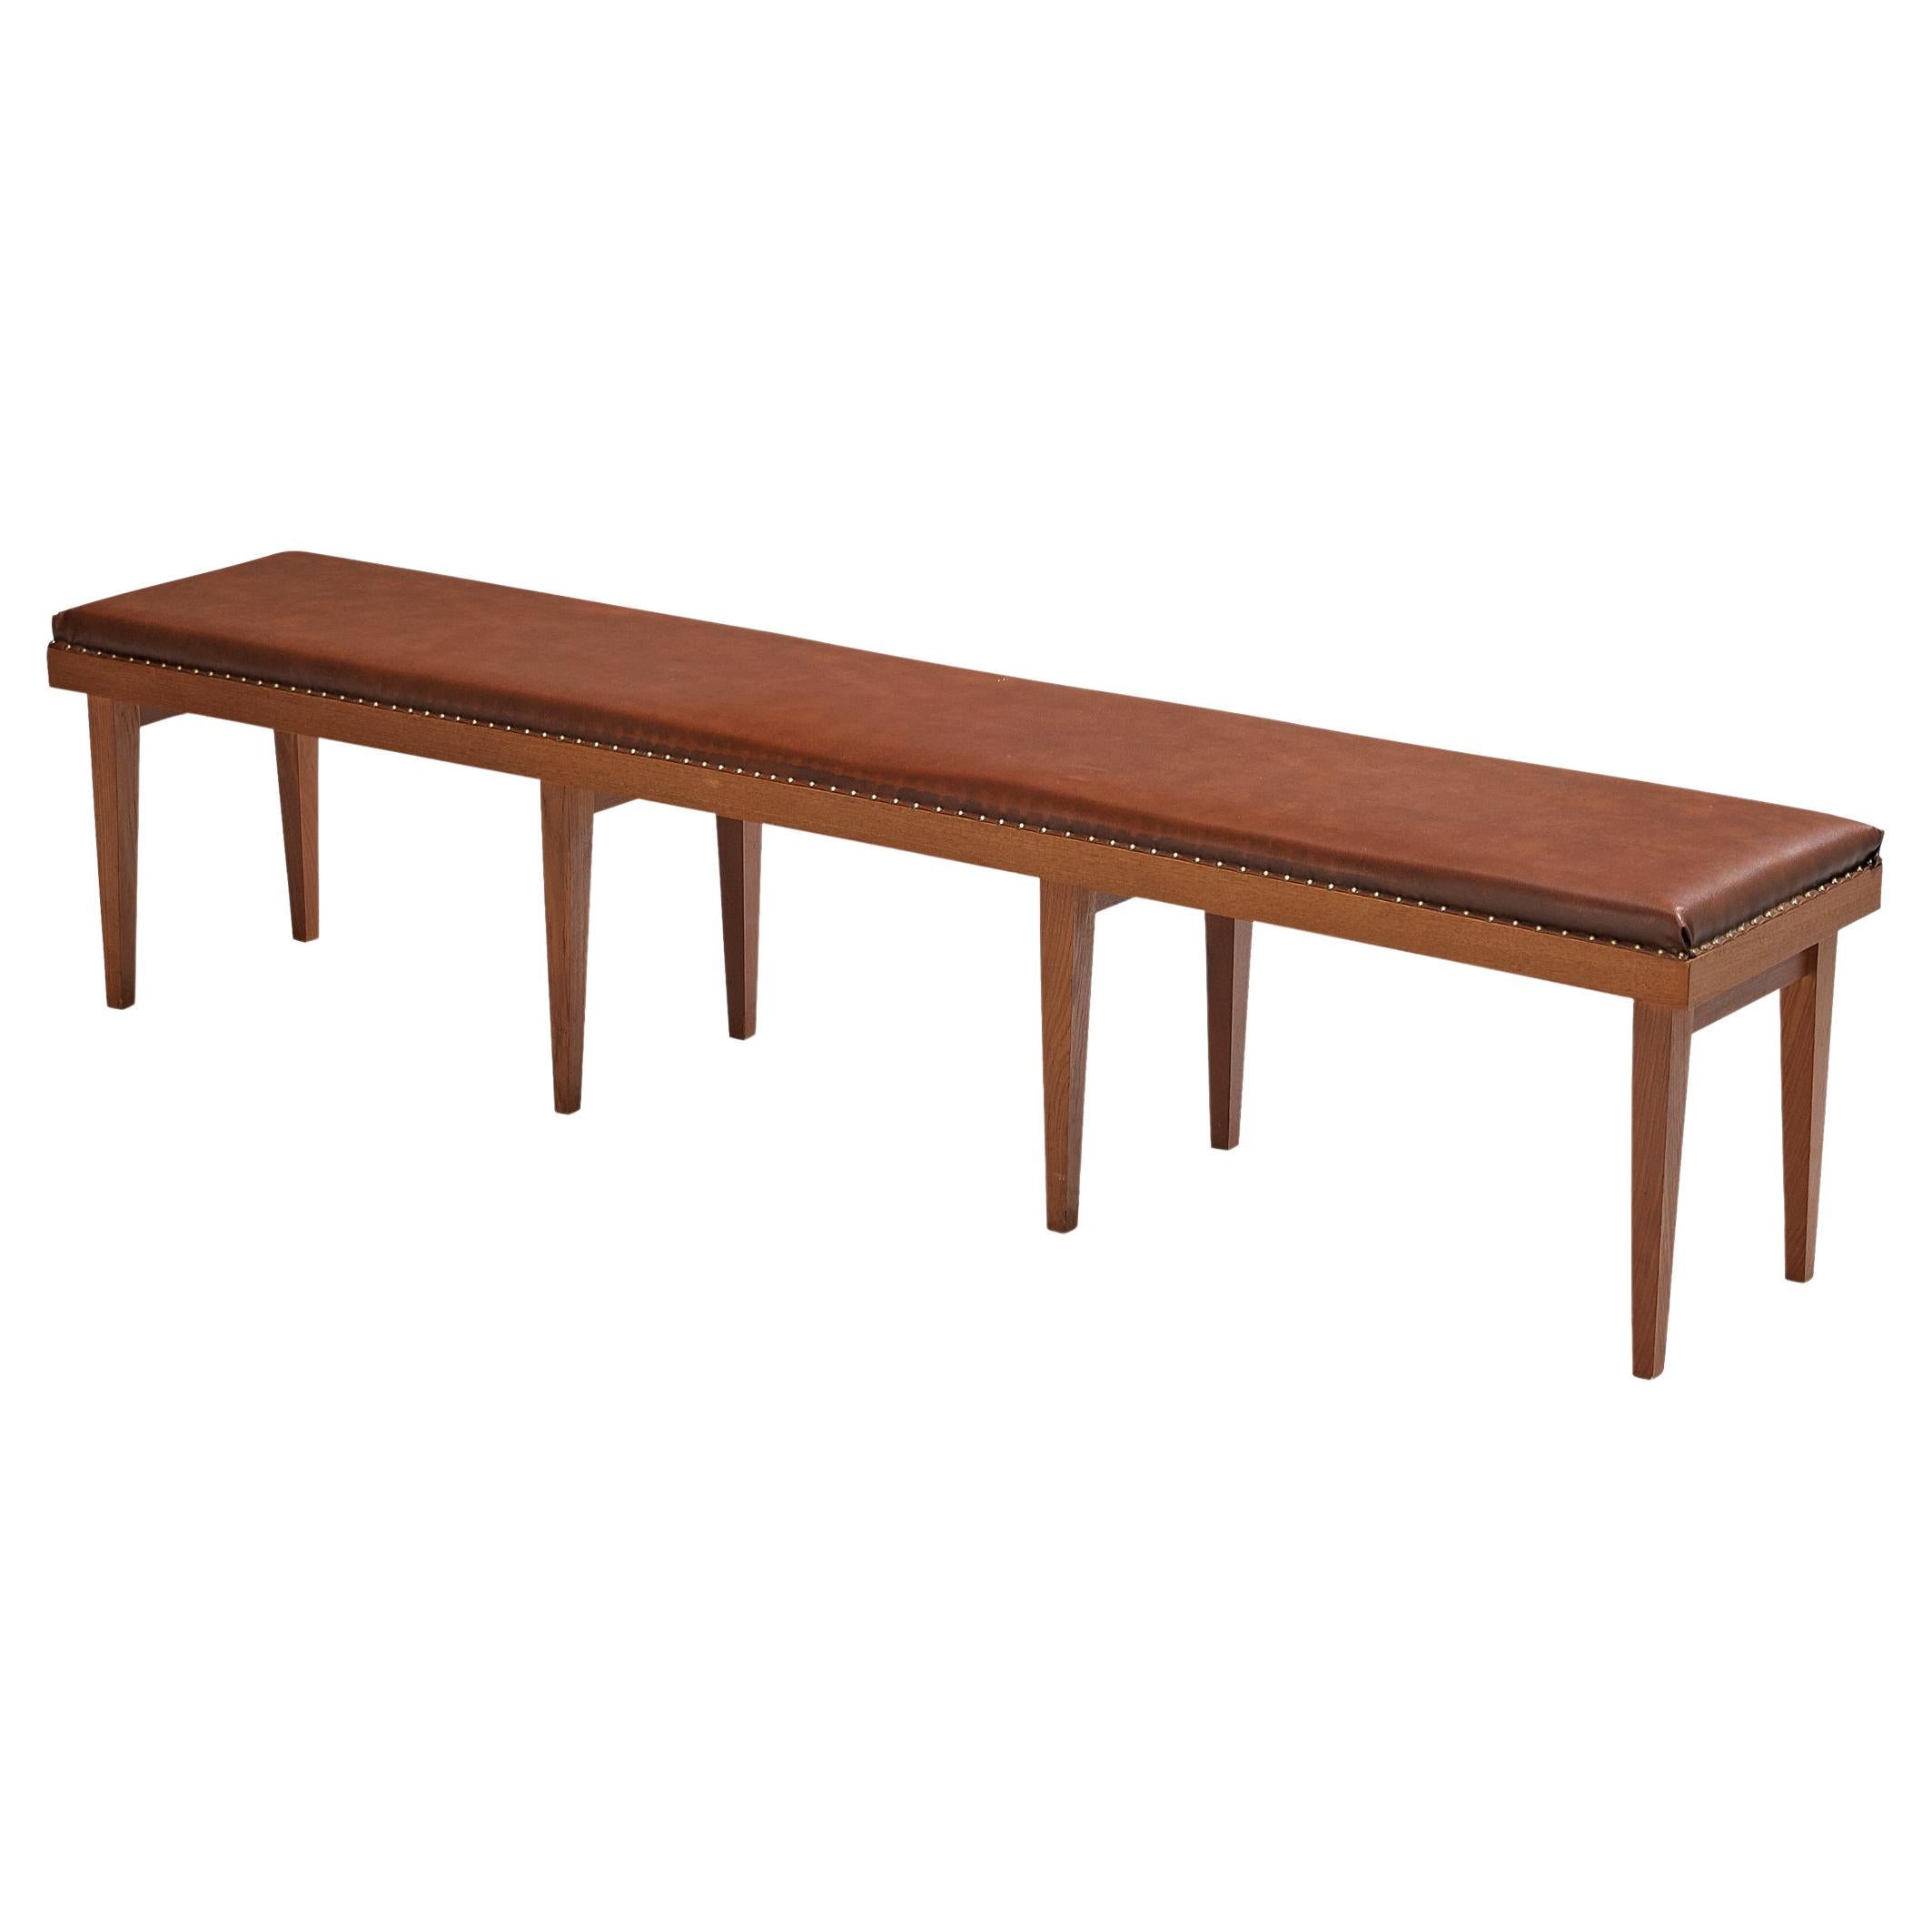 Scandinavian Modern Bench in Chestnut Upholstery and Teak  For Sale